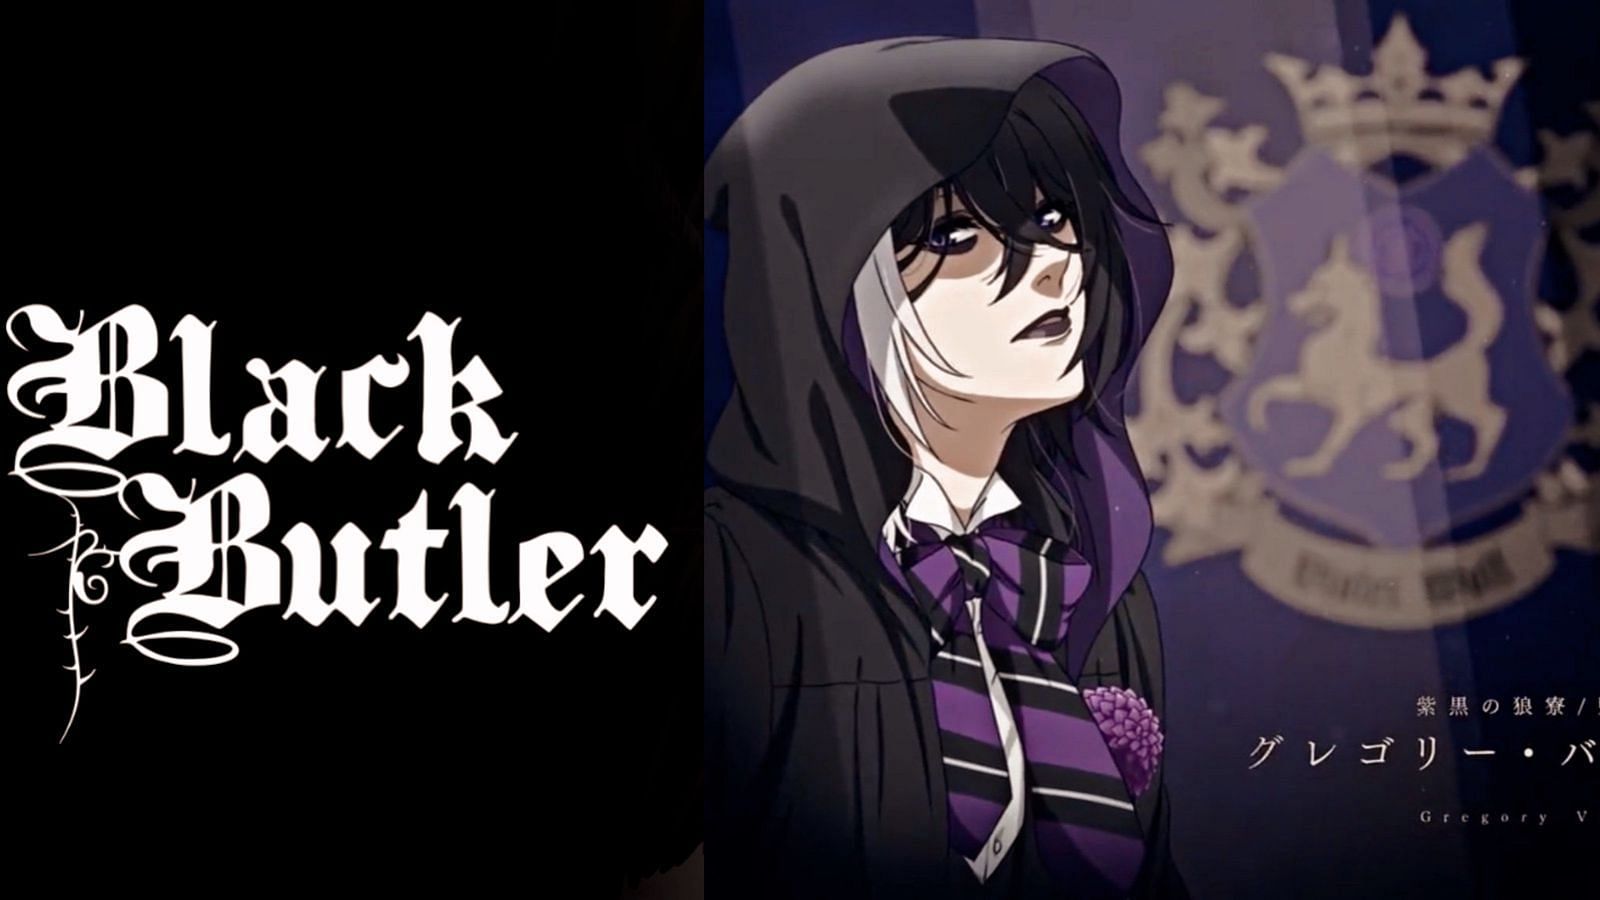 New Black Butler anime reveals the Public School arc trailer at